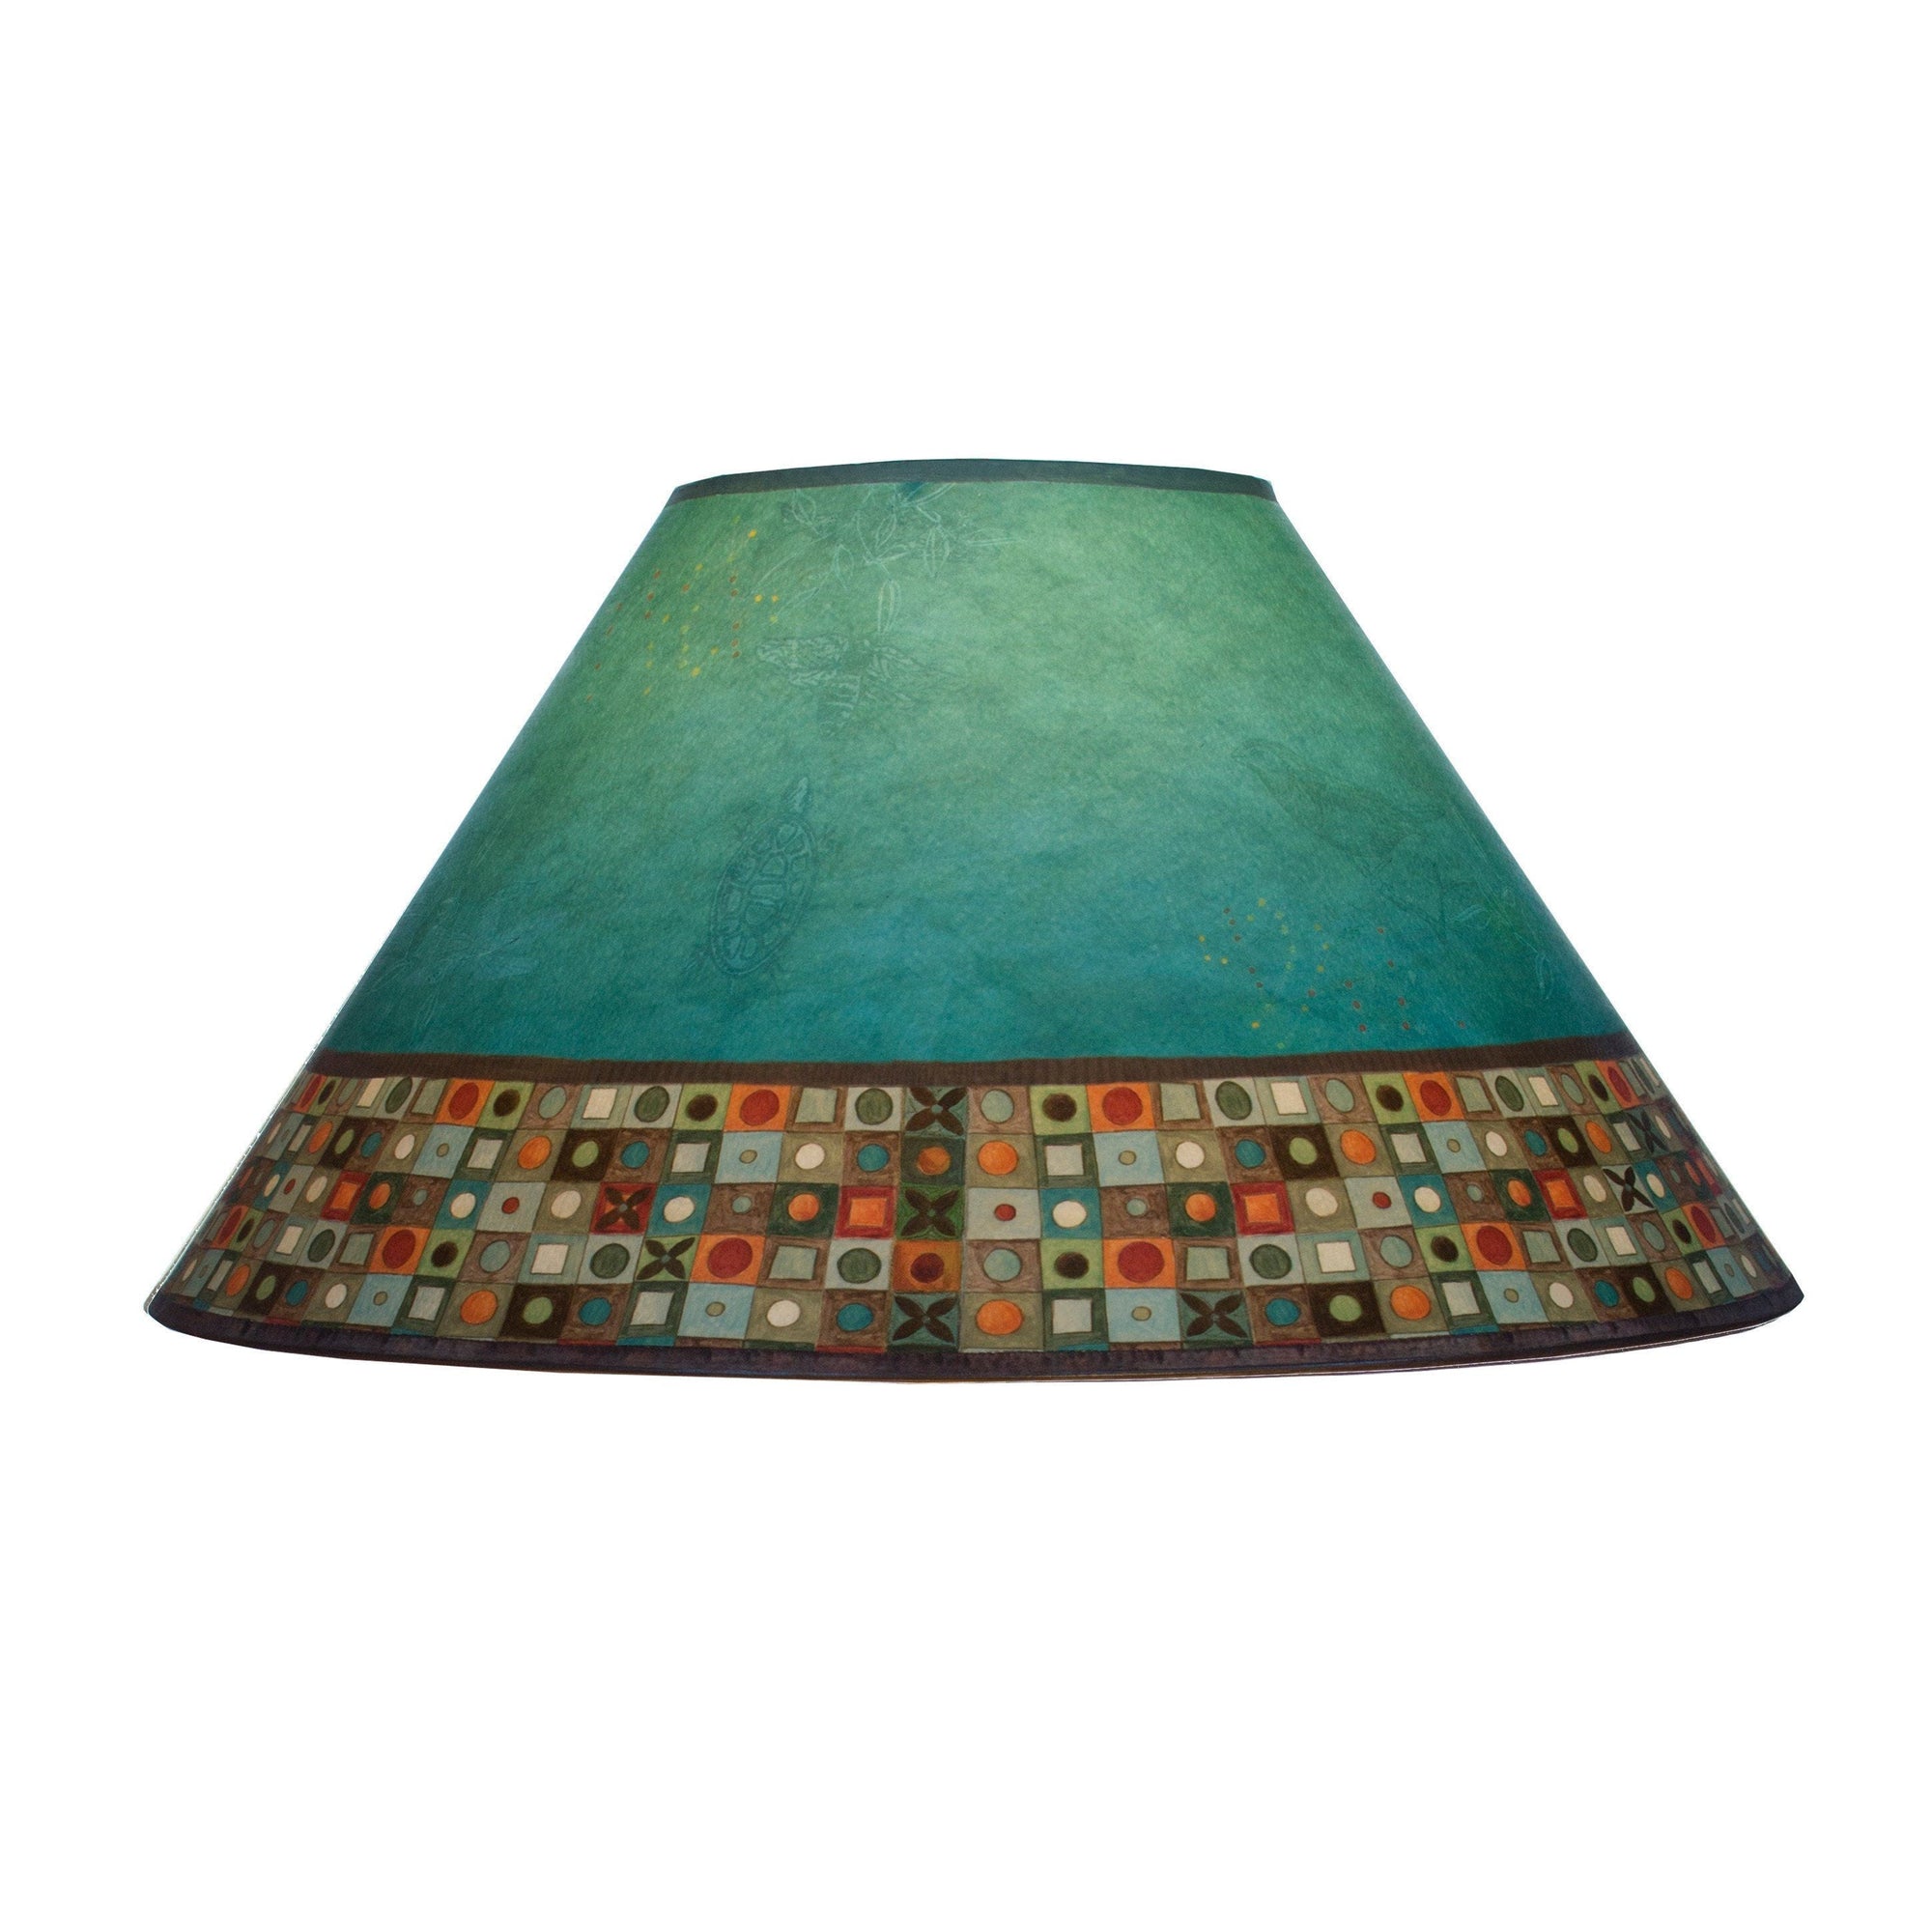 Janna Ugone & Co Lamp Shades Large Conical Lamp Shade in Jade Mosaic